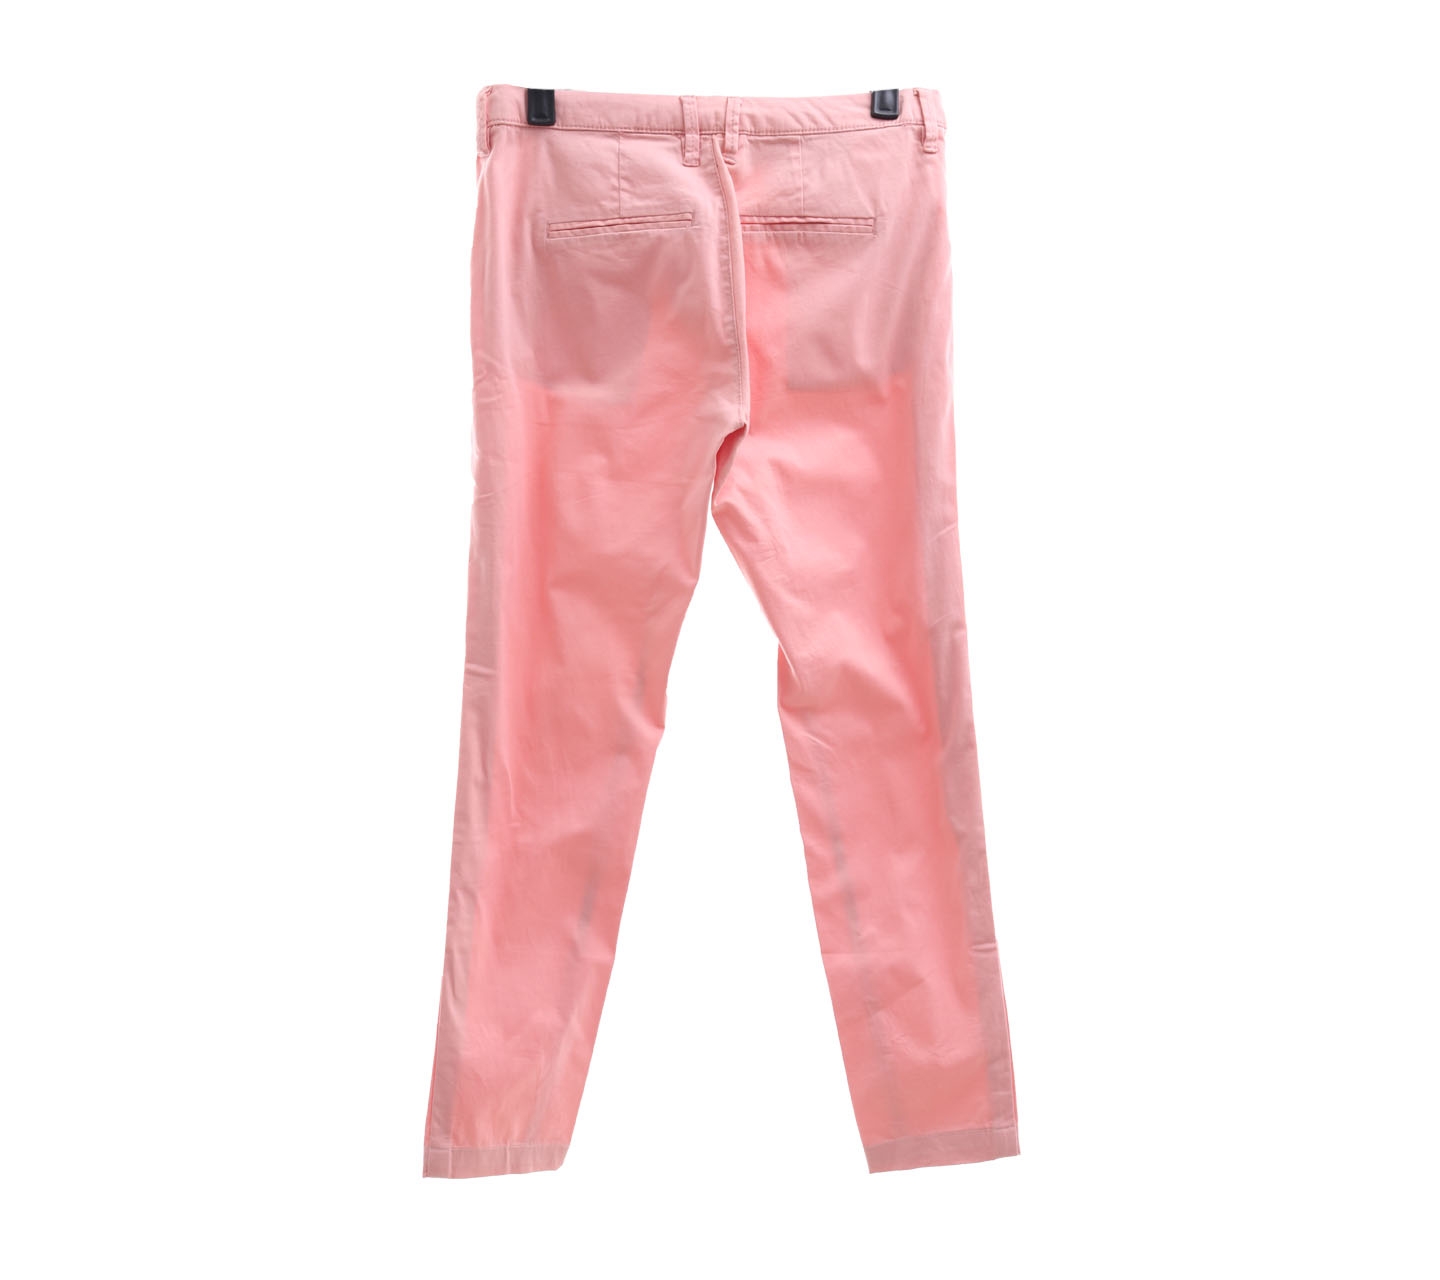 Mexx Soft Pink Long Pants